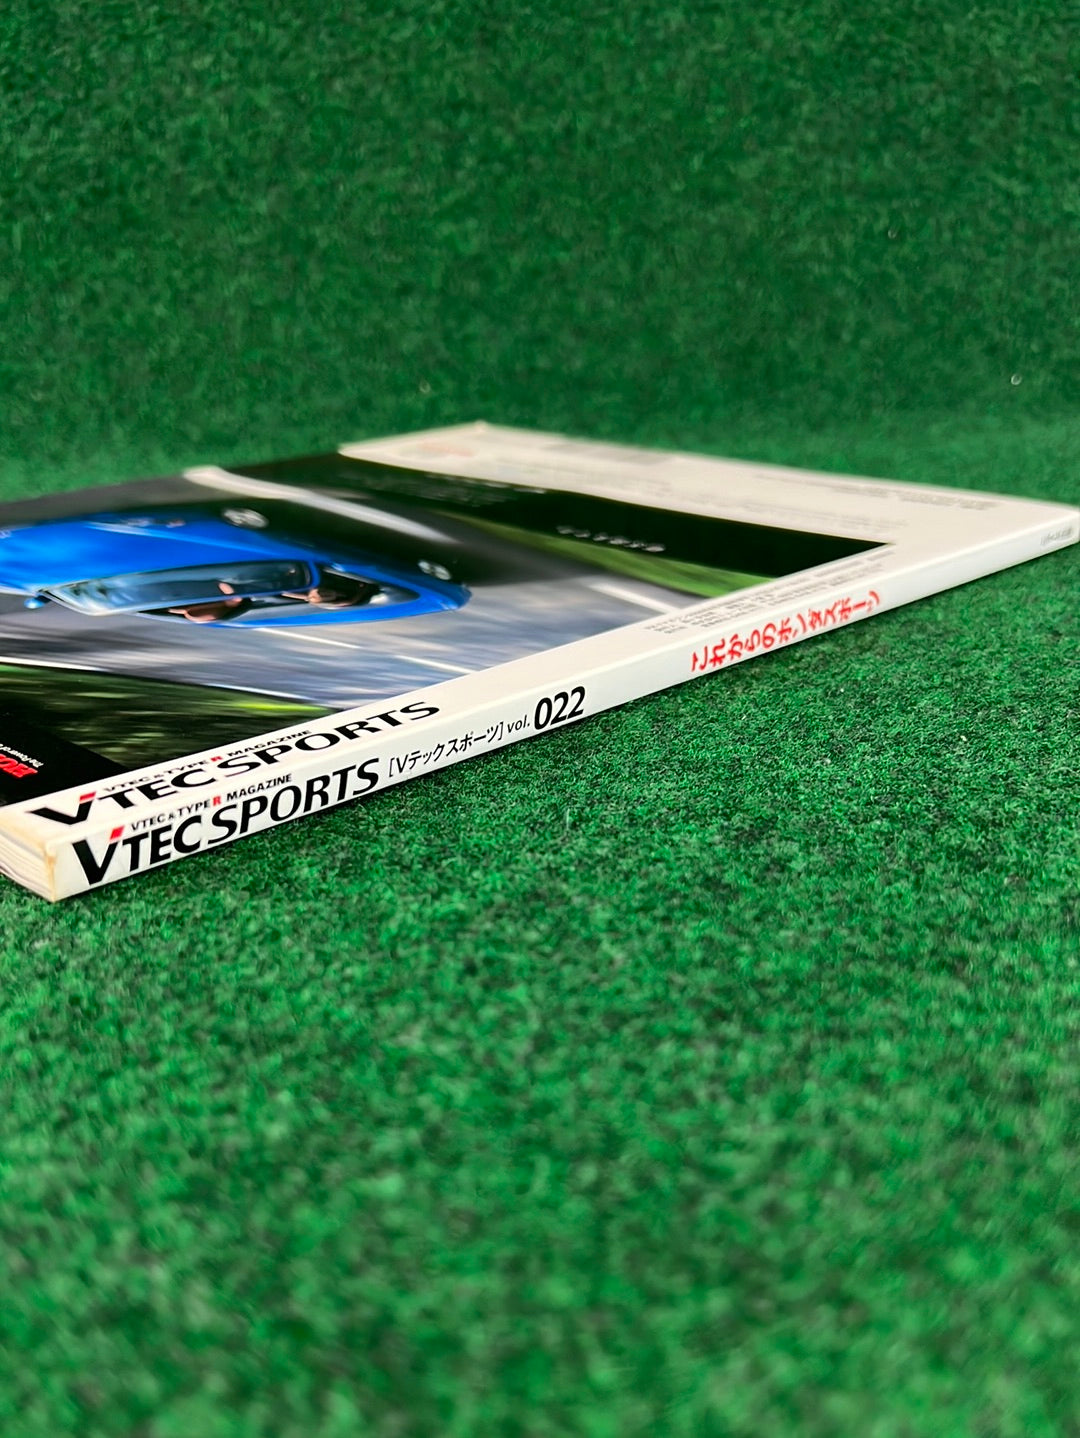 VTEC SPORTS Magazine - Vol. 022